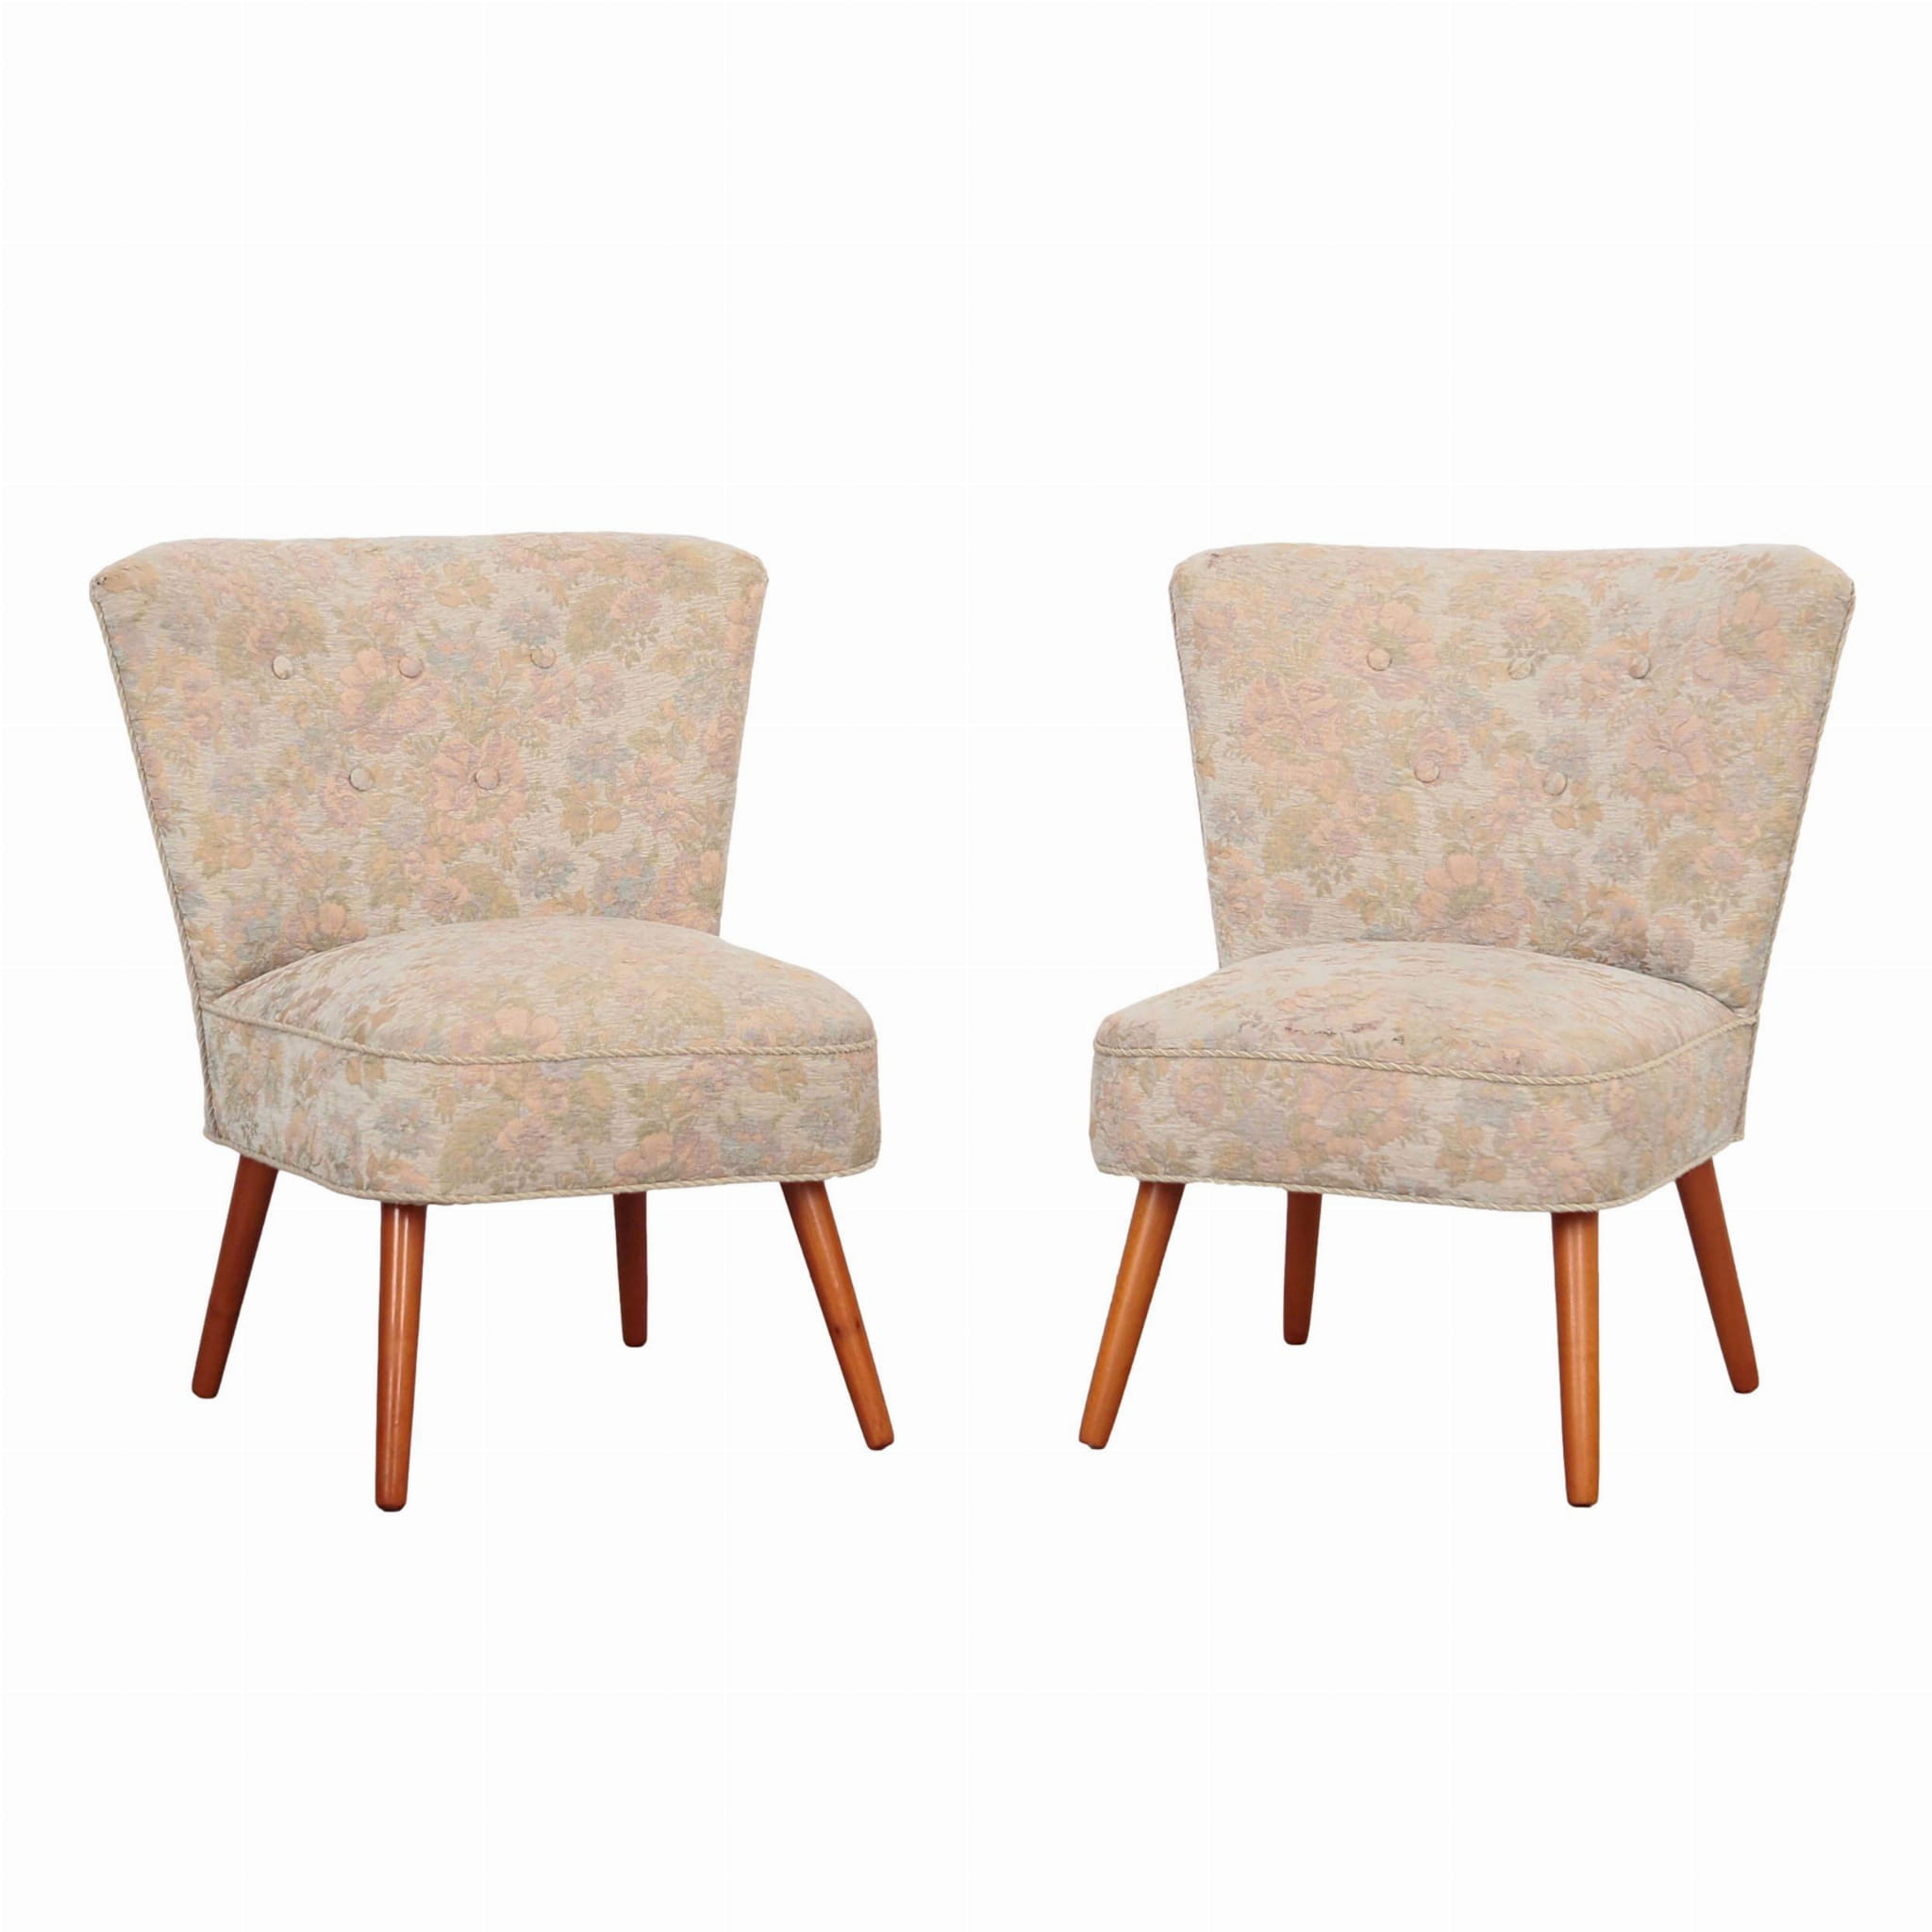 2x Vintage Sessel Buchenholz Textil Beige 1970er Jahre